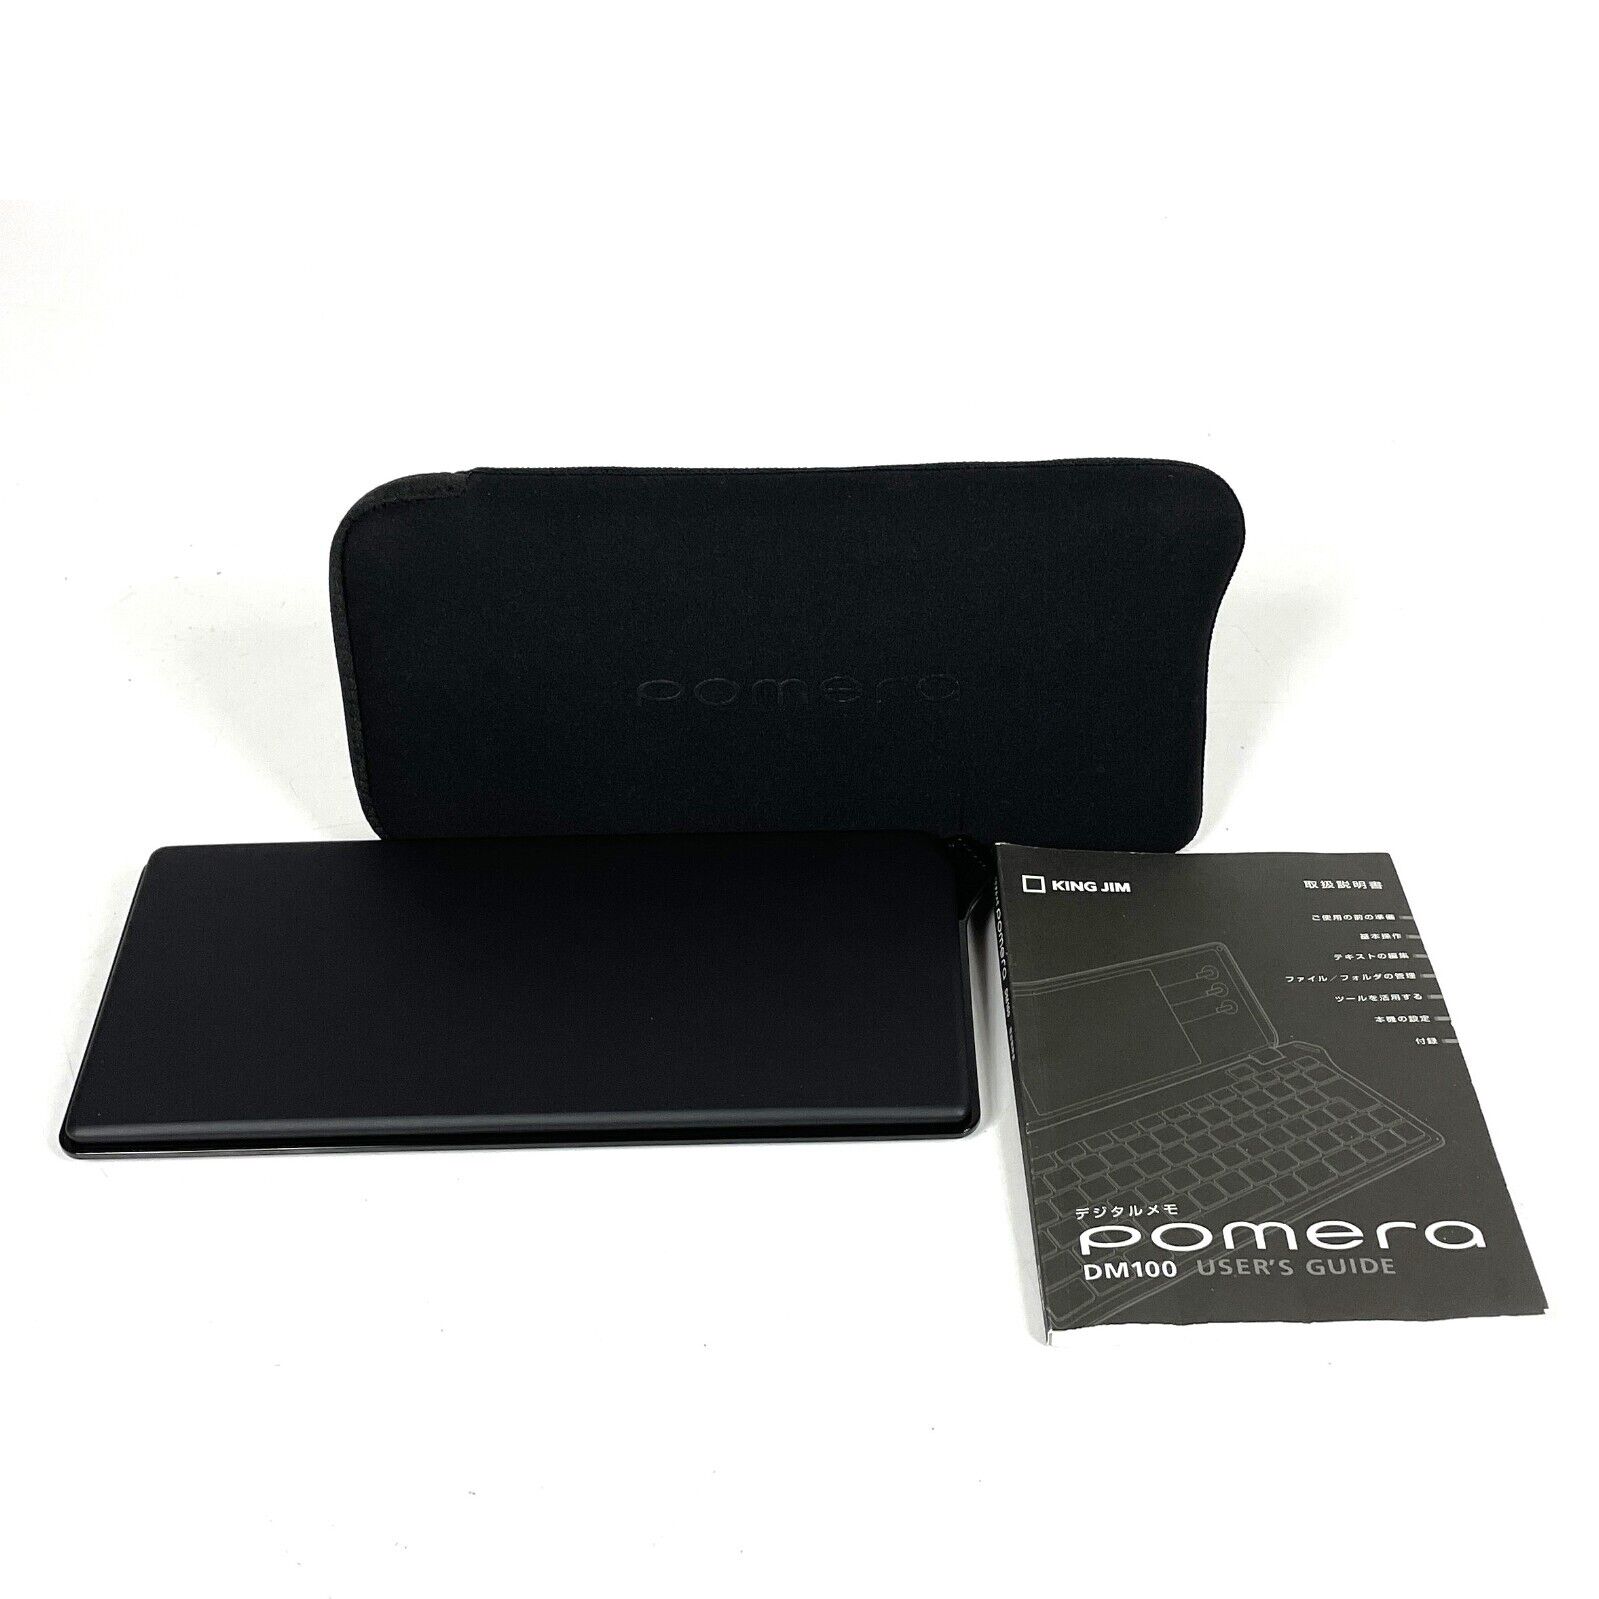 King Jim Pomera DM100 Digital Memo tool  5.7inch display Bluetooth